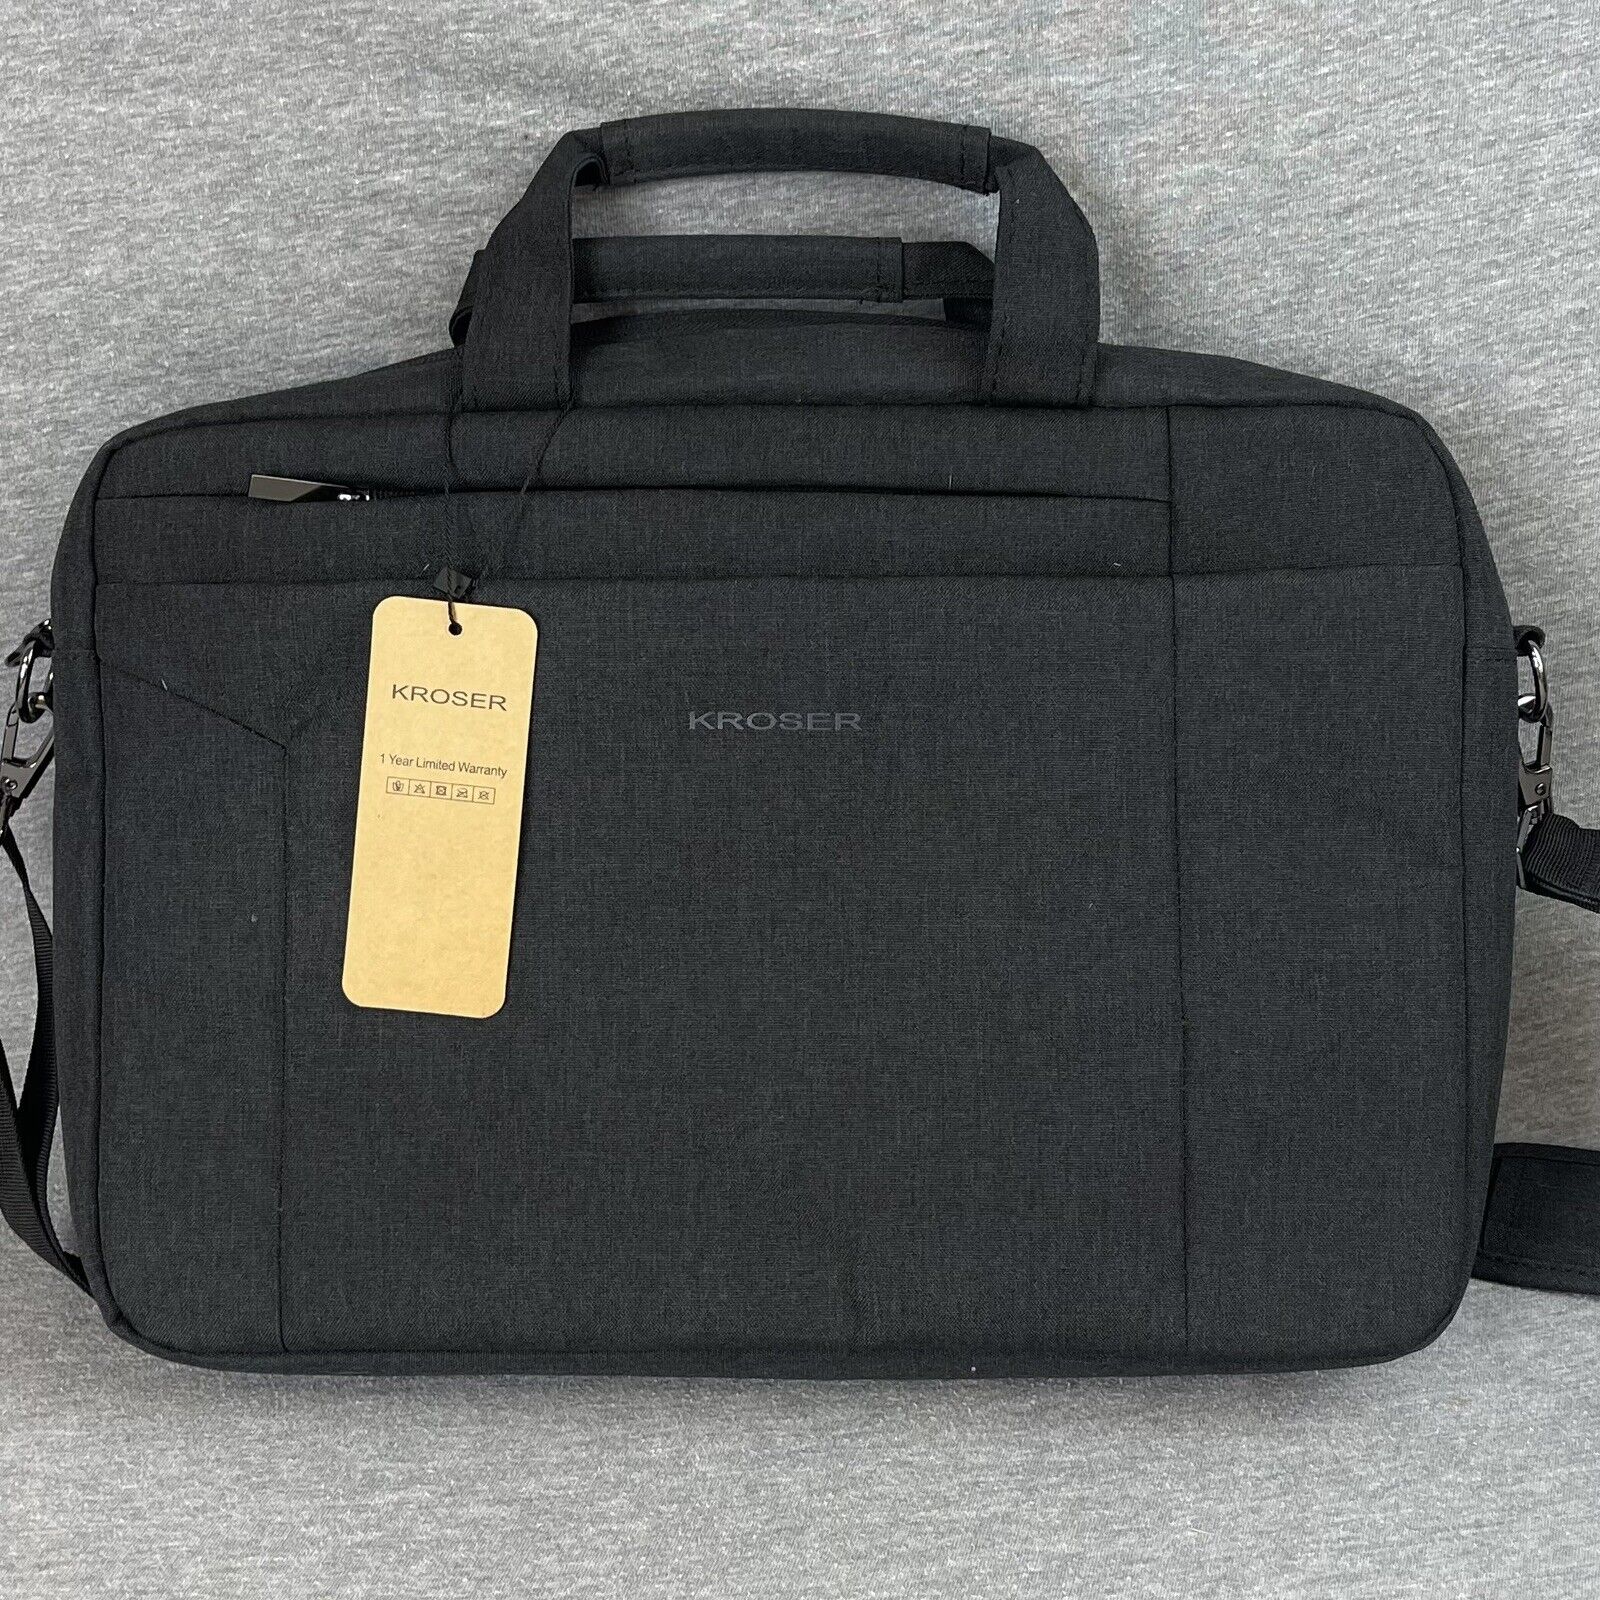 KROSER Laptop Bag 15 Inch Briefcase Shoulder Bag Water Repellent Dark Gray NEW